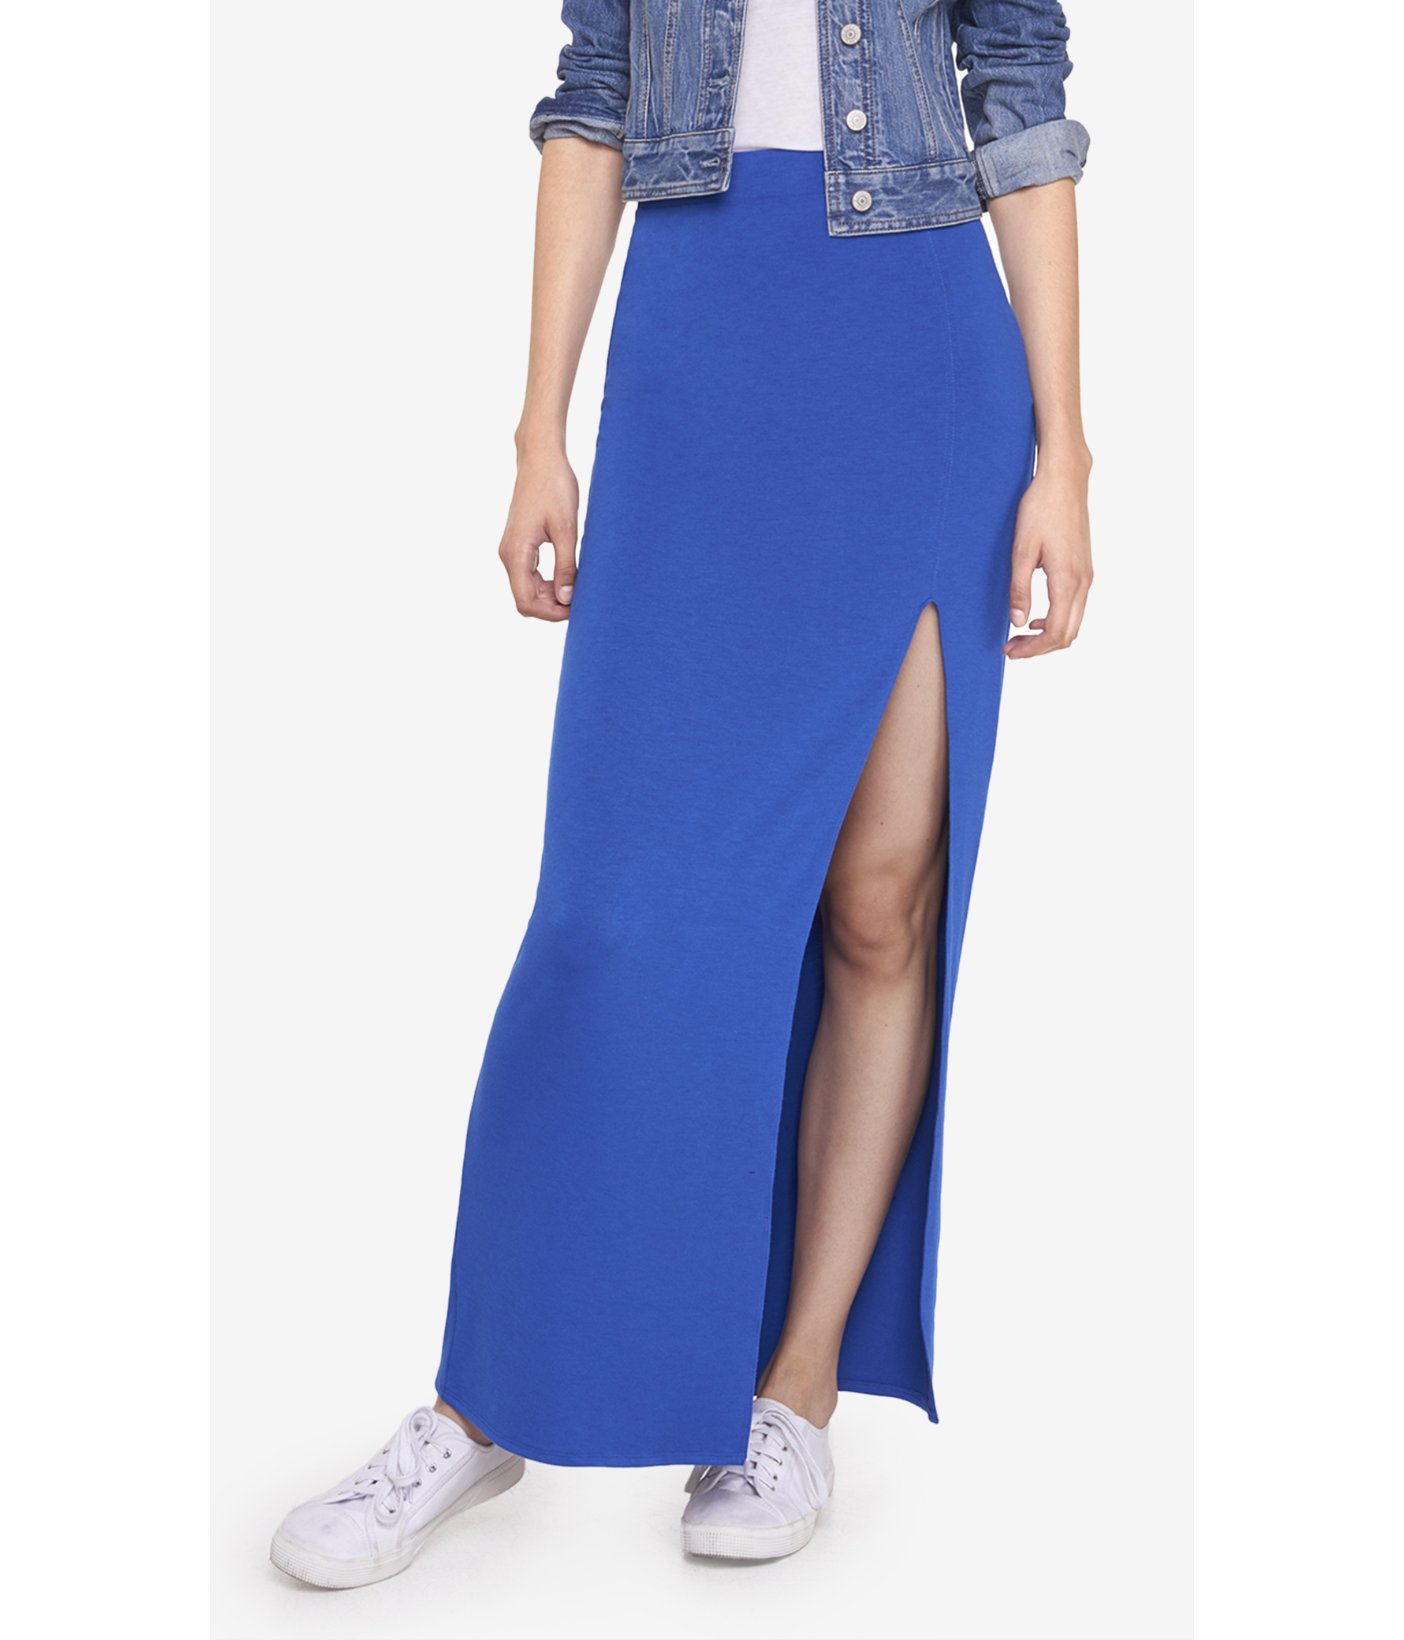 Lyst - Express Knit High Slit Maxi Skirt in Blue